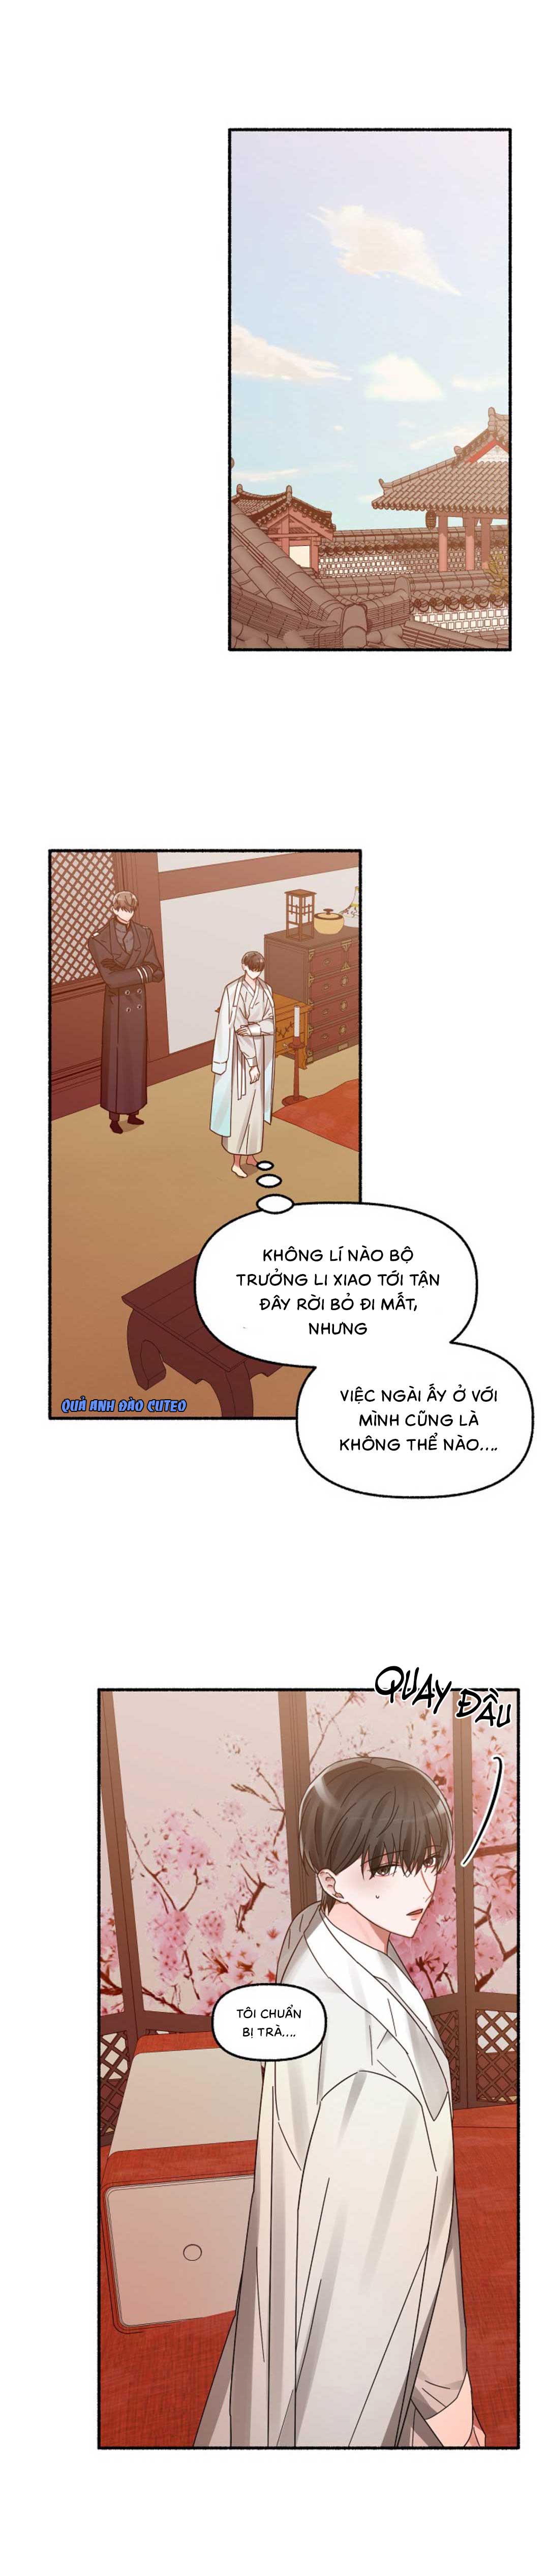 Hoa Triều Chapter 10 - Trang 12